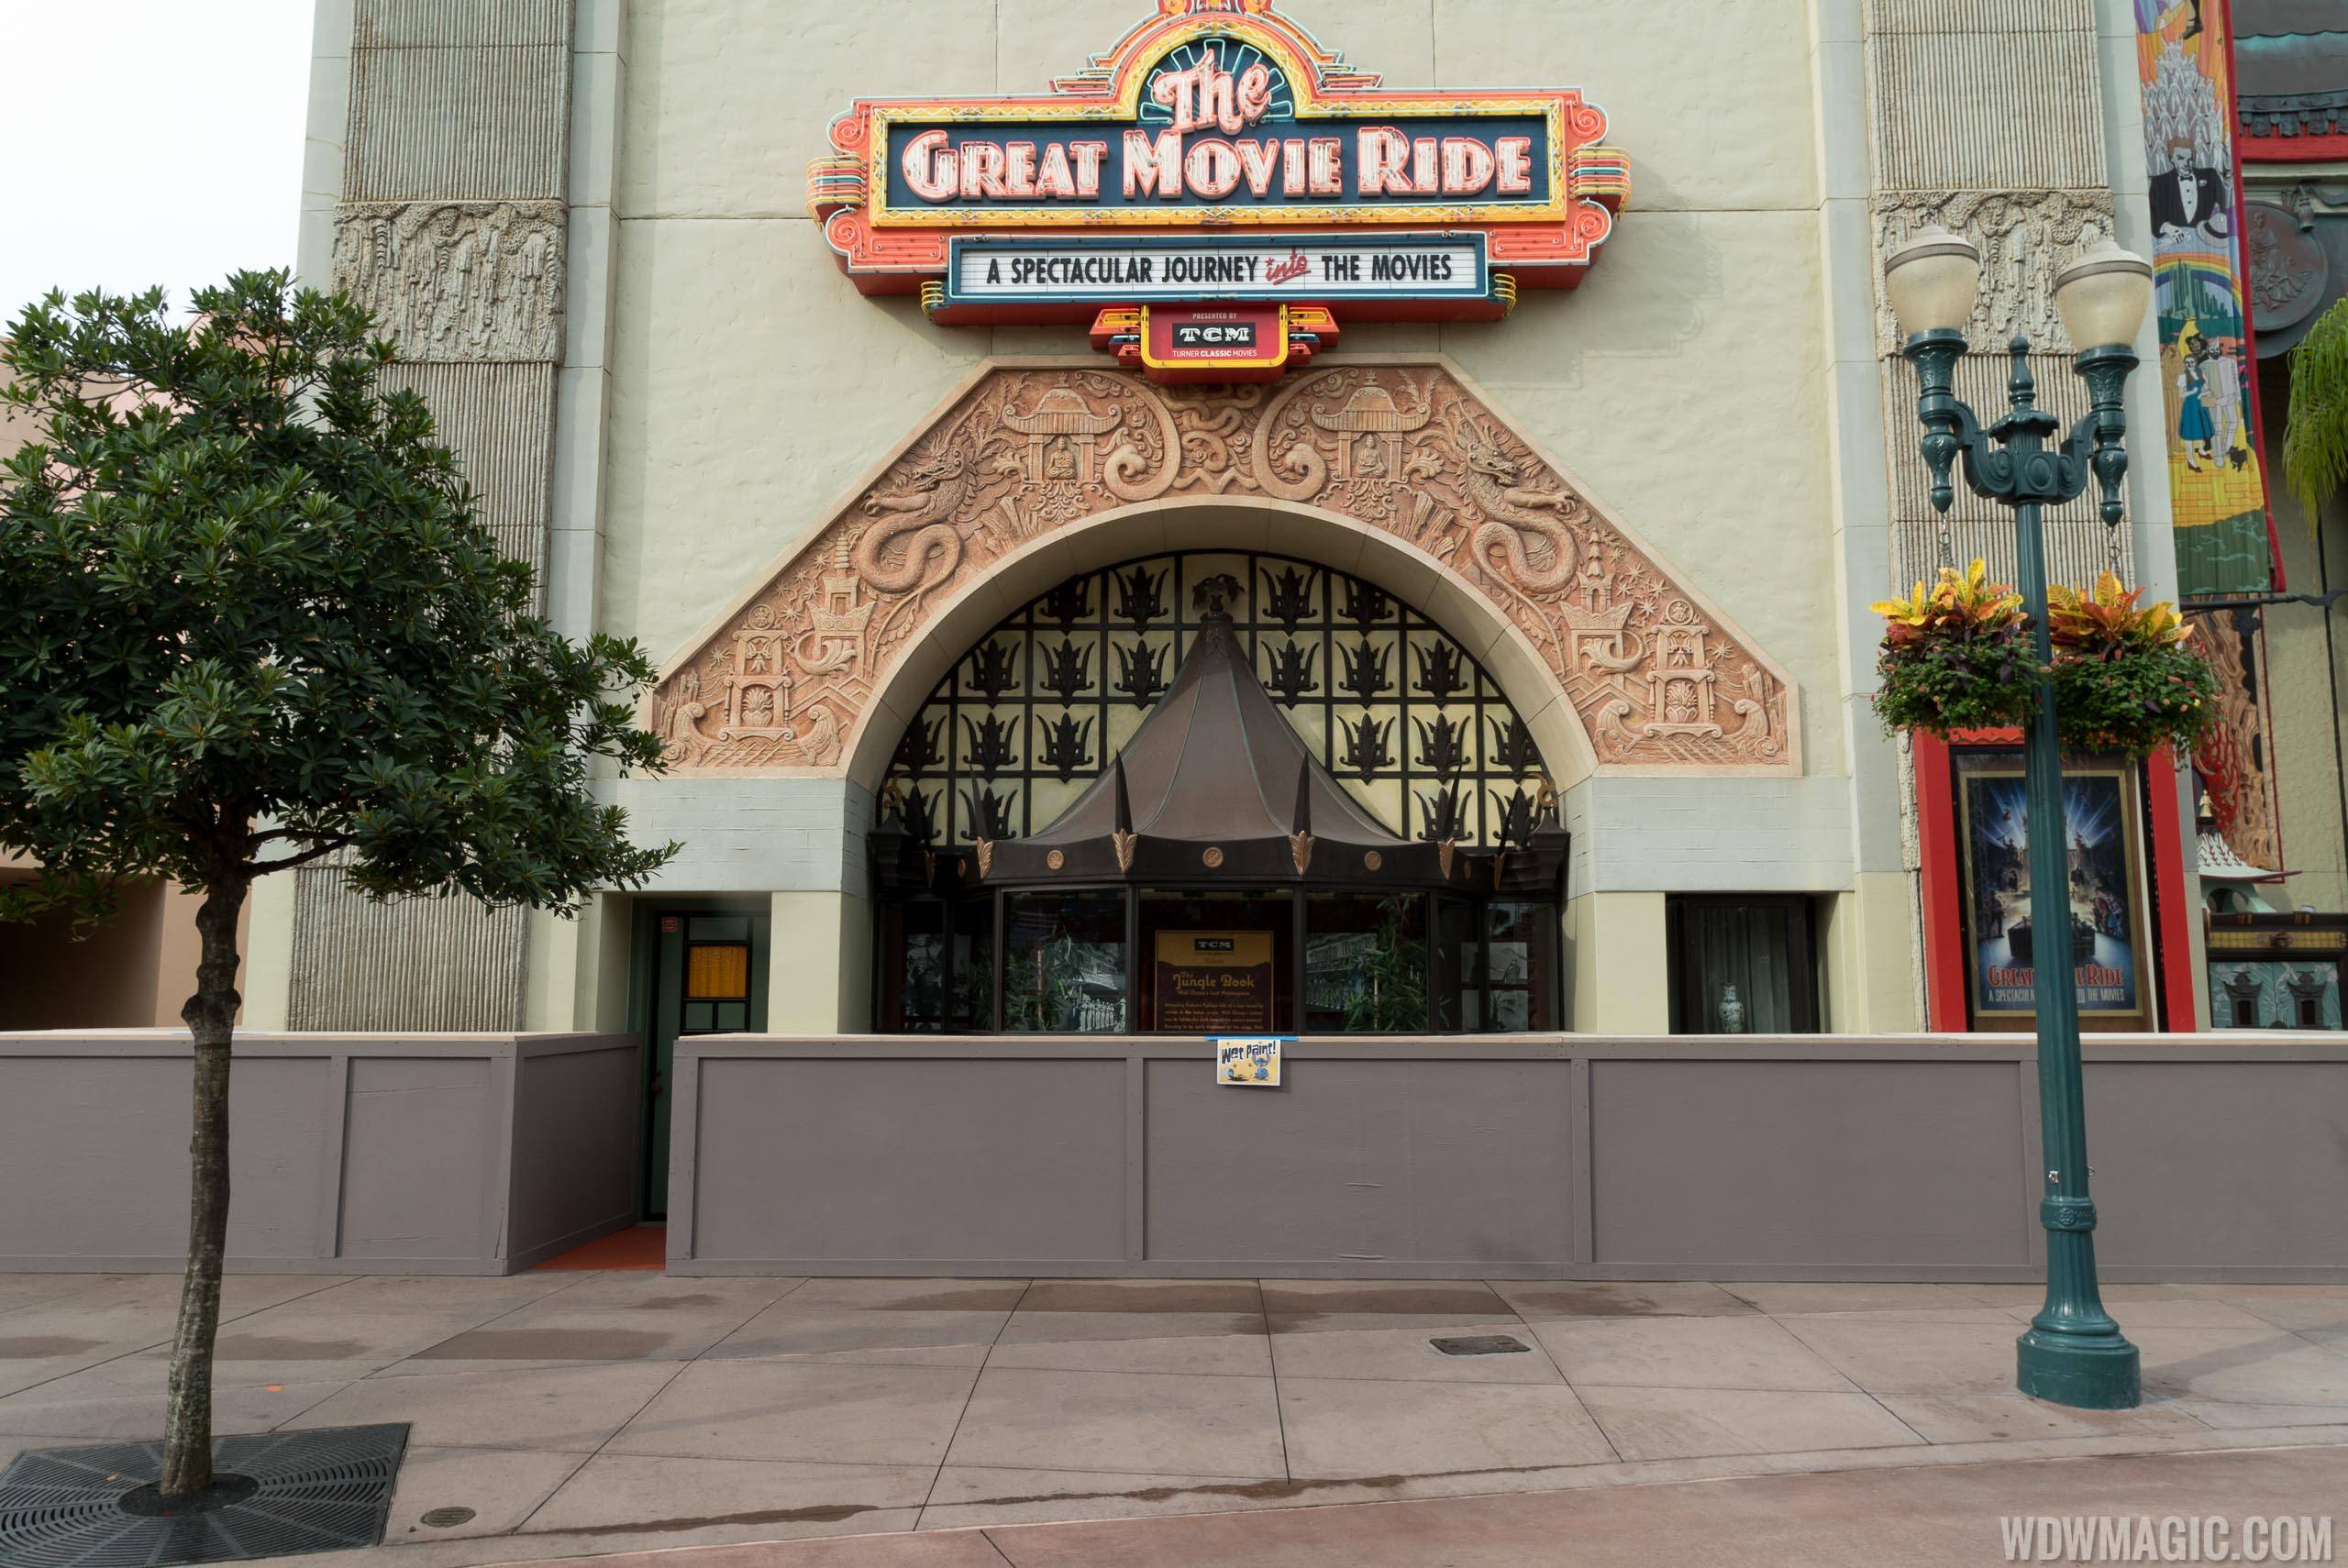 The Great Movie Ride exterior refurbishment